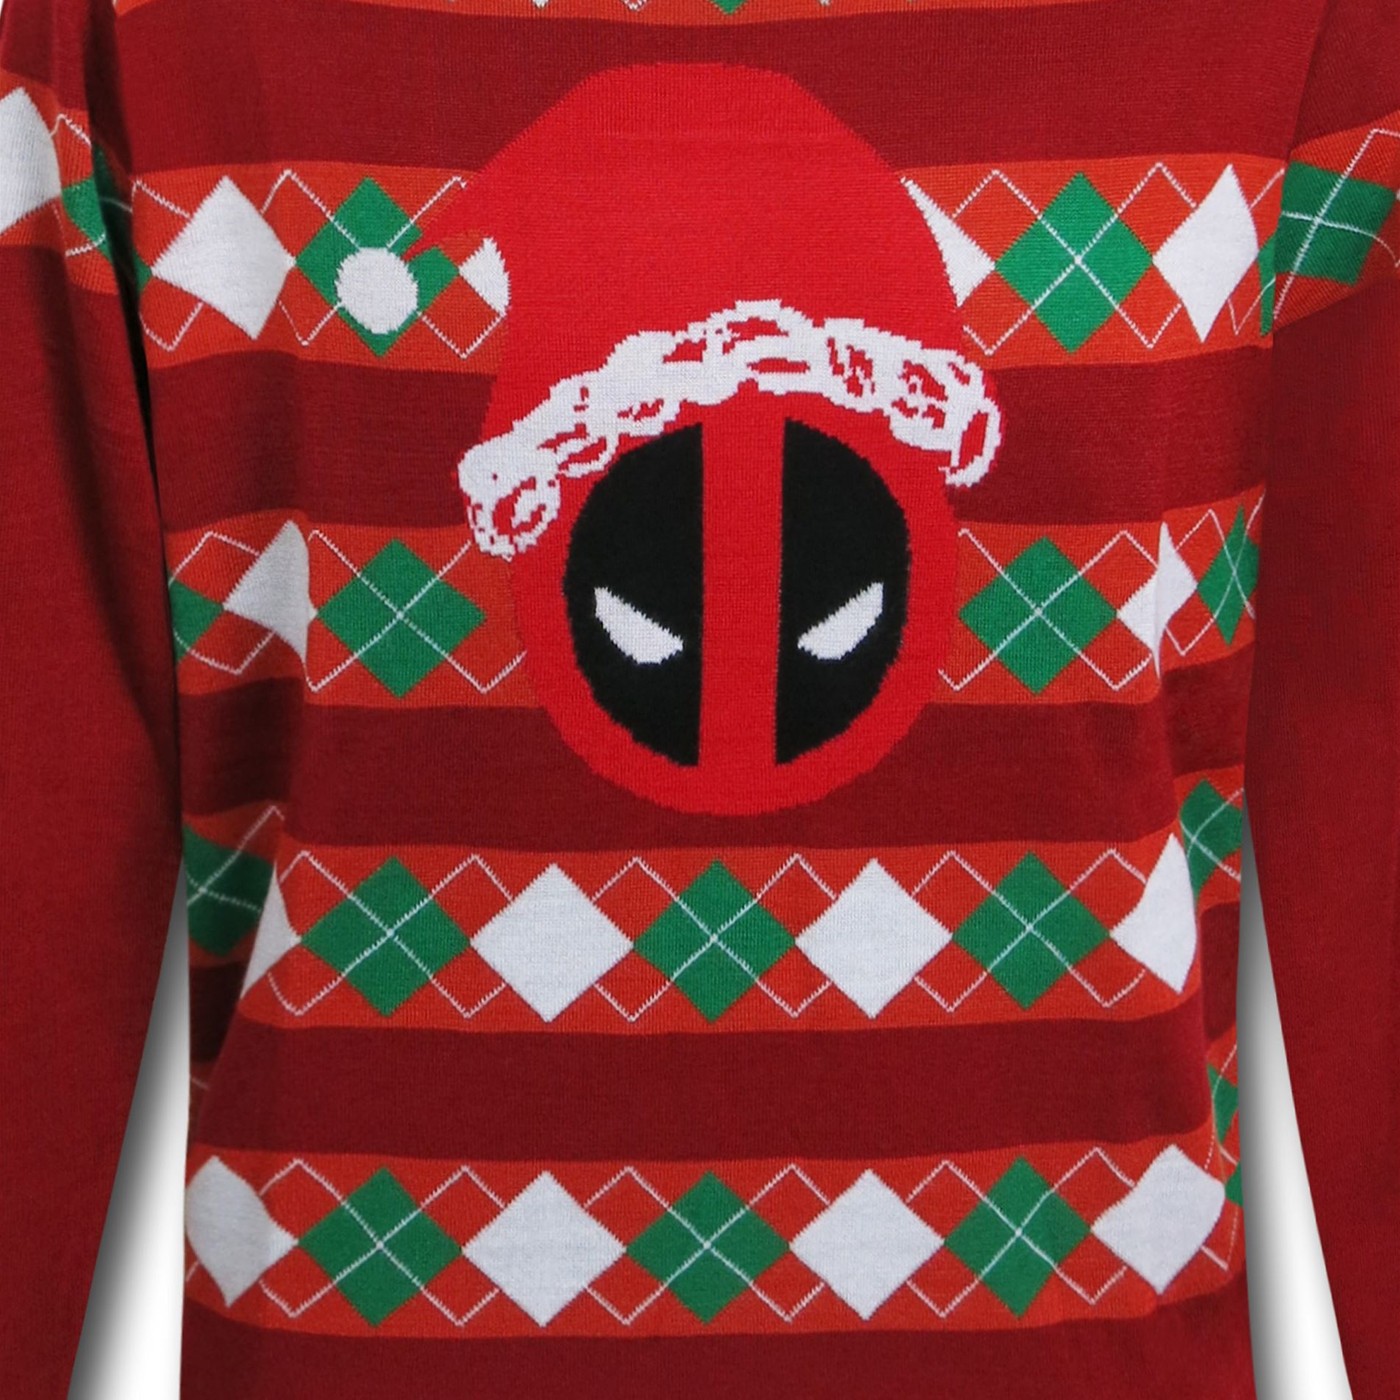 Deadpool "Christmas Sweater" Sweatshirt